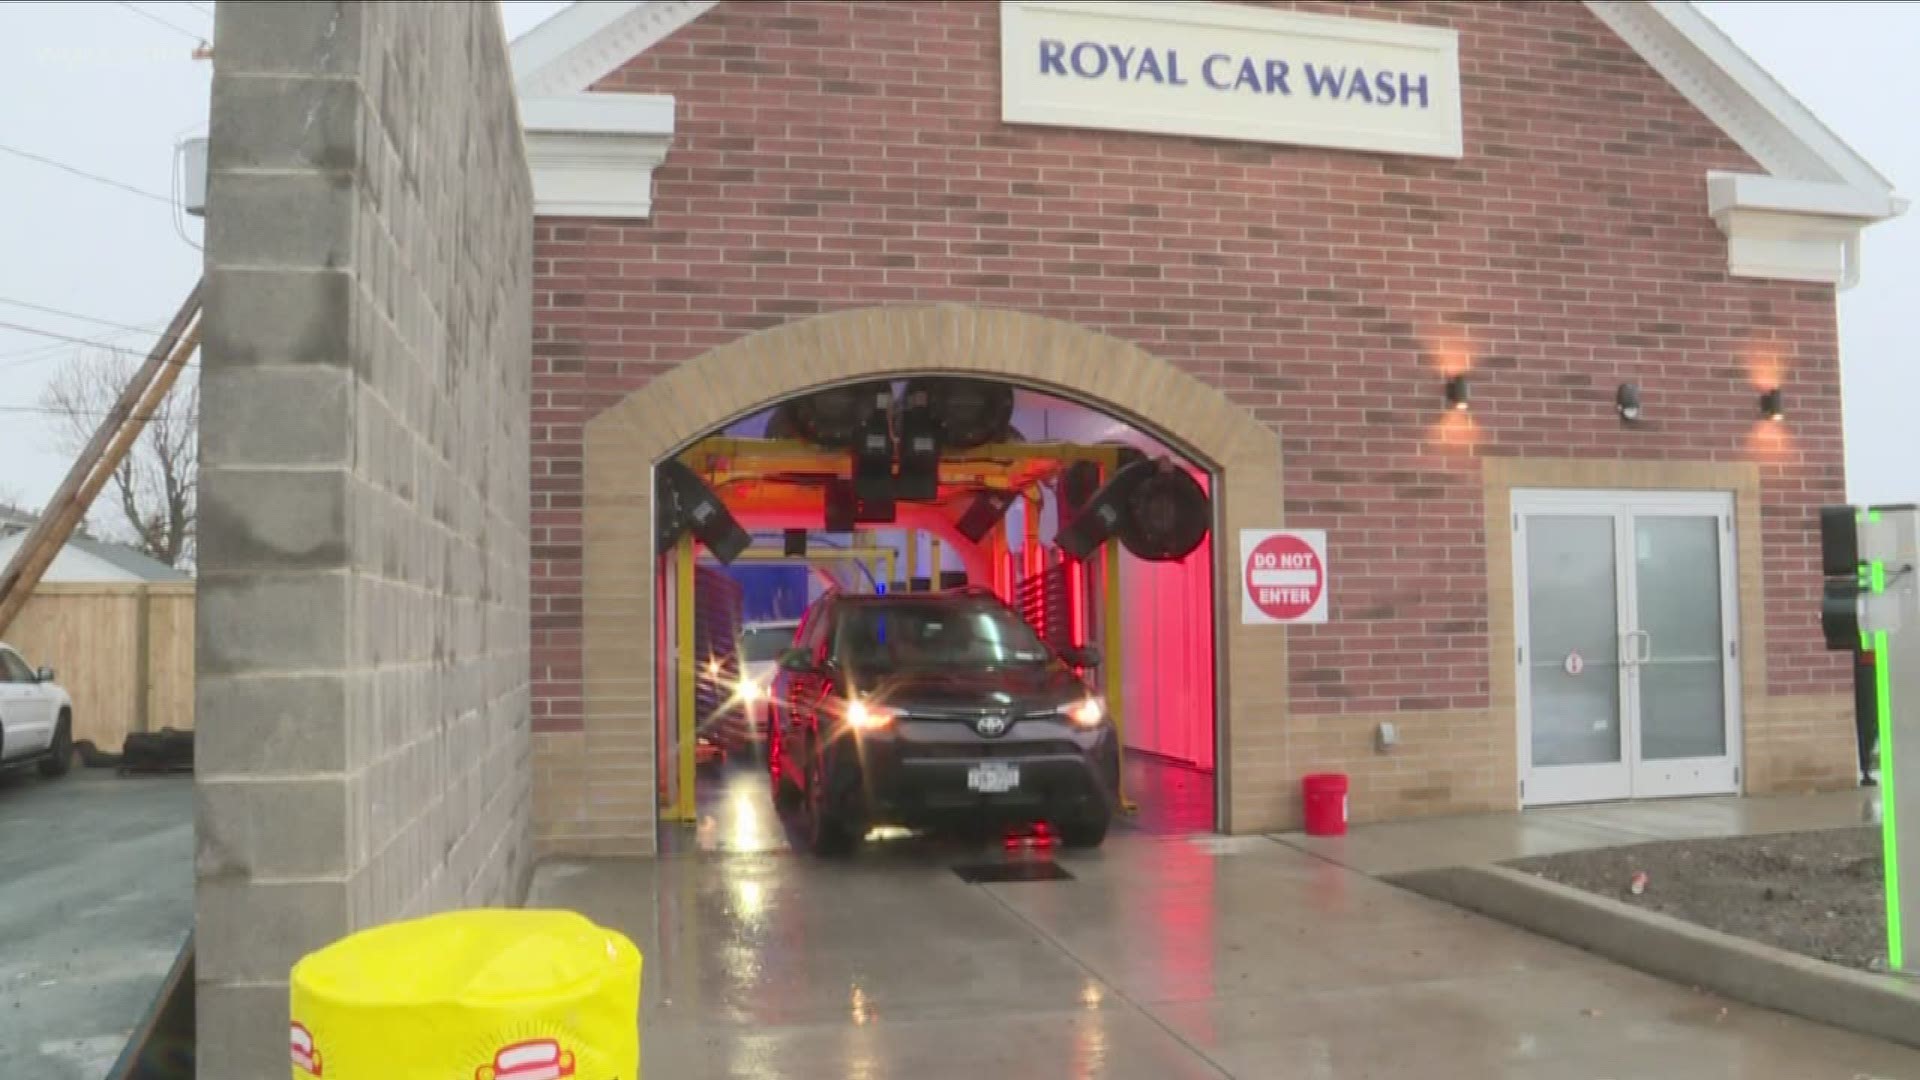 Royal Car Wash opens 3rd location in Buffalo area